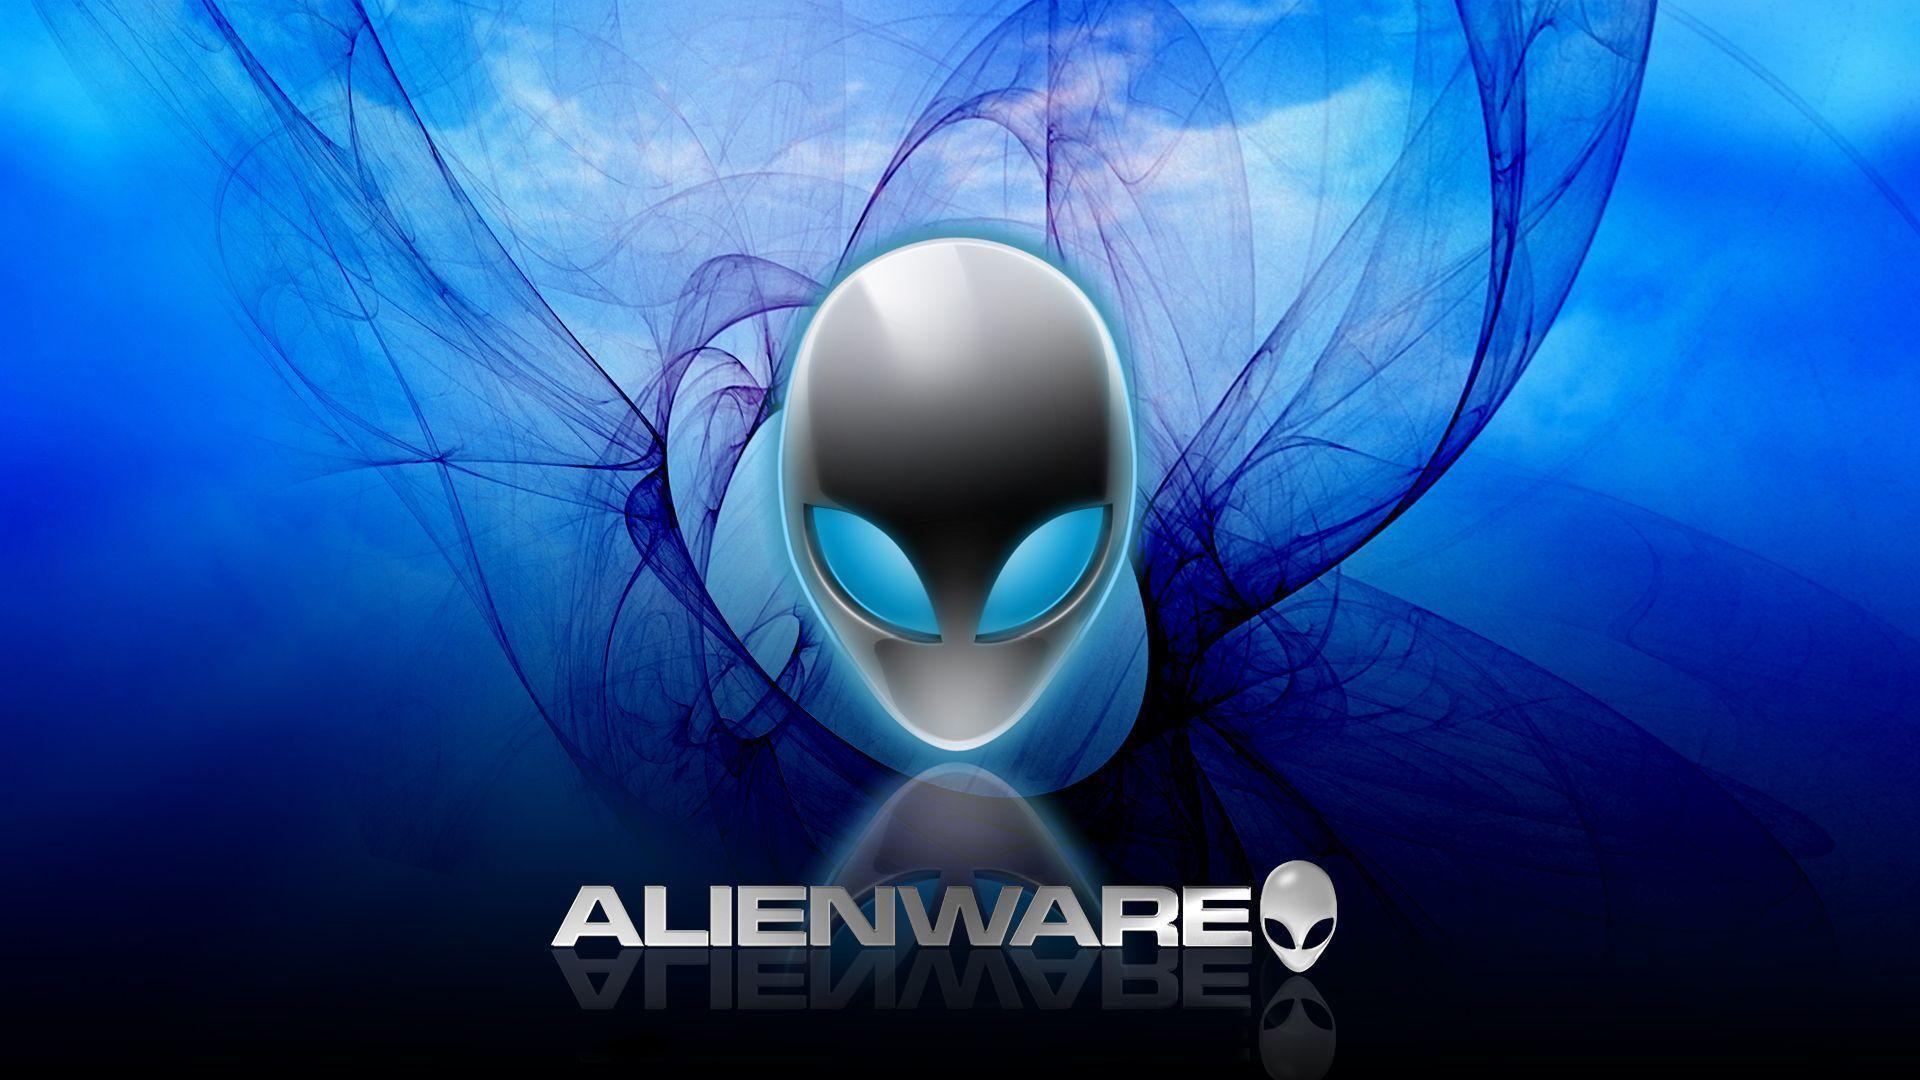 Alienware Wallpaper 46 179195 Image HD Wallpaper. Wallfoy.com